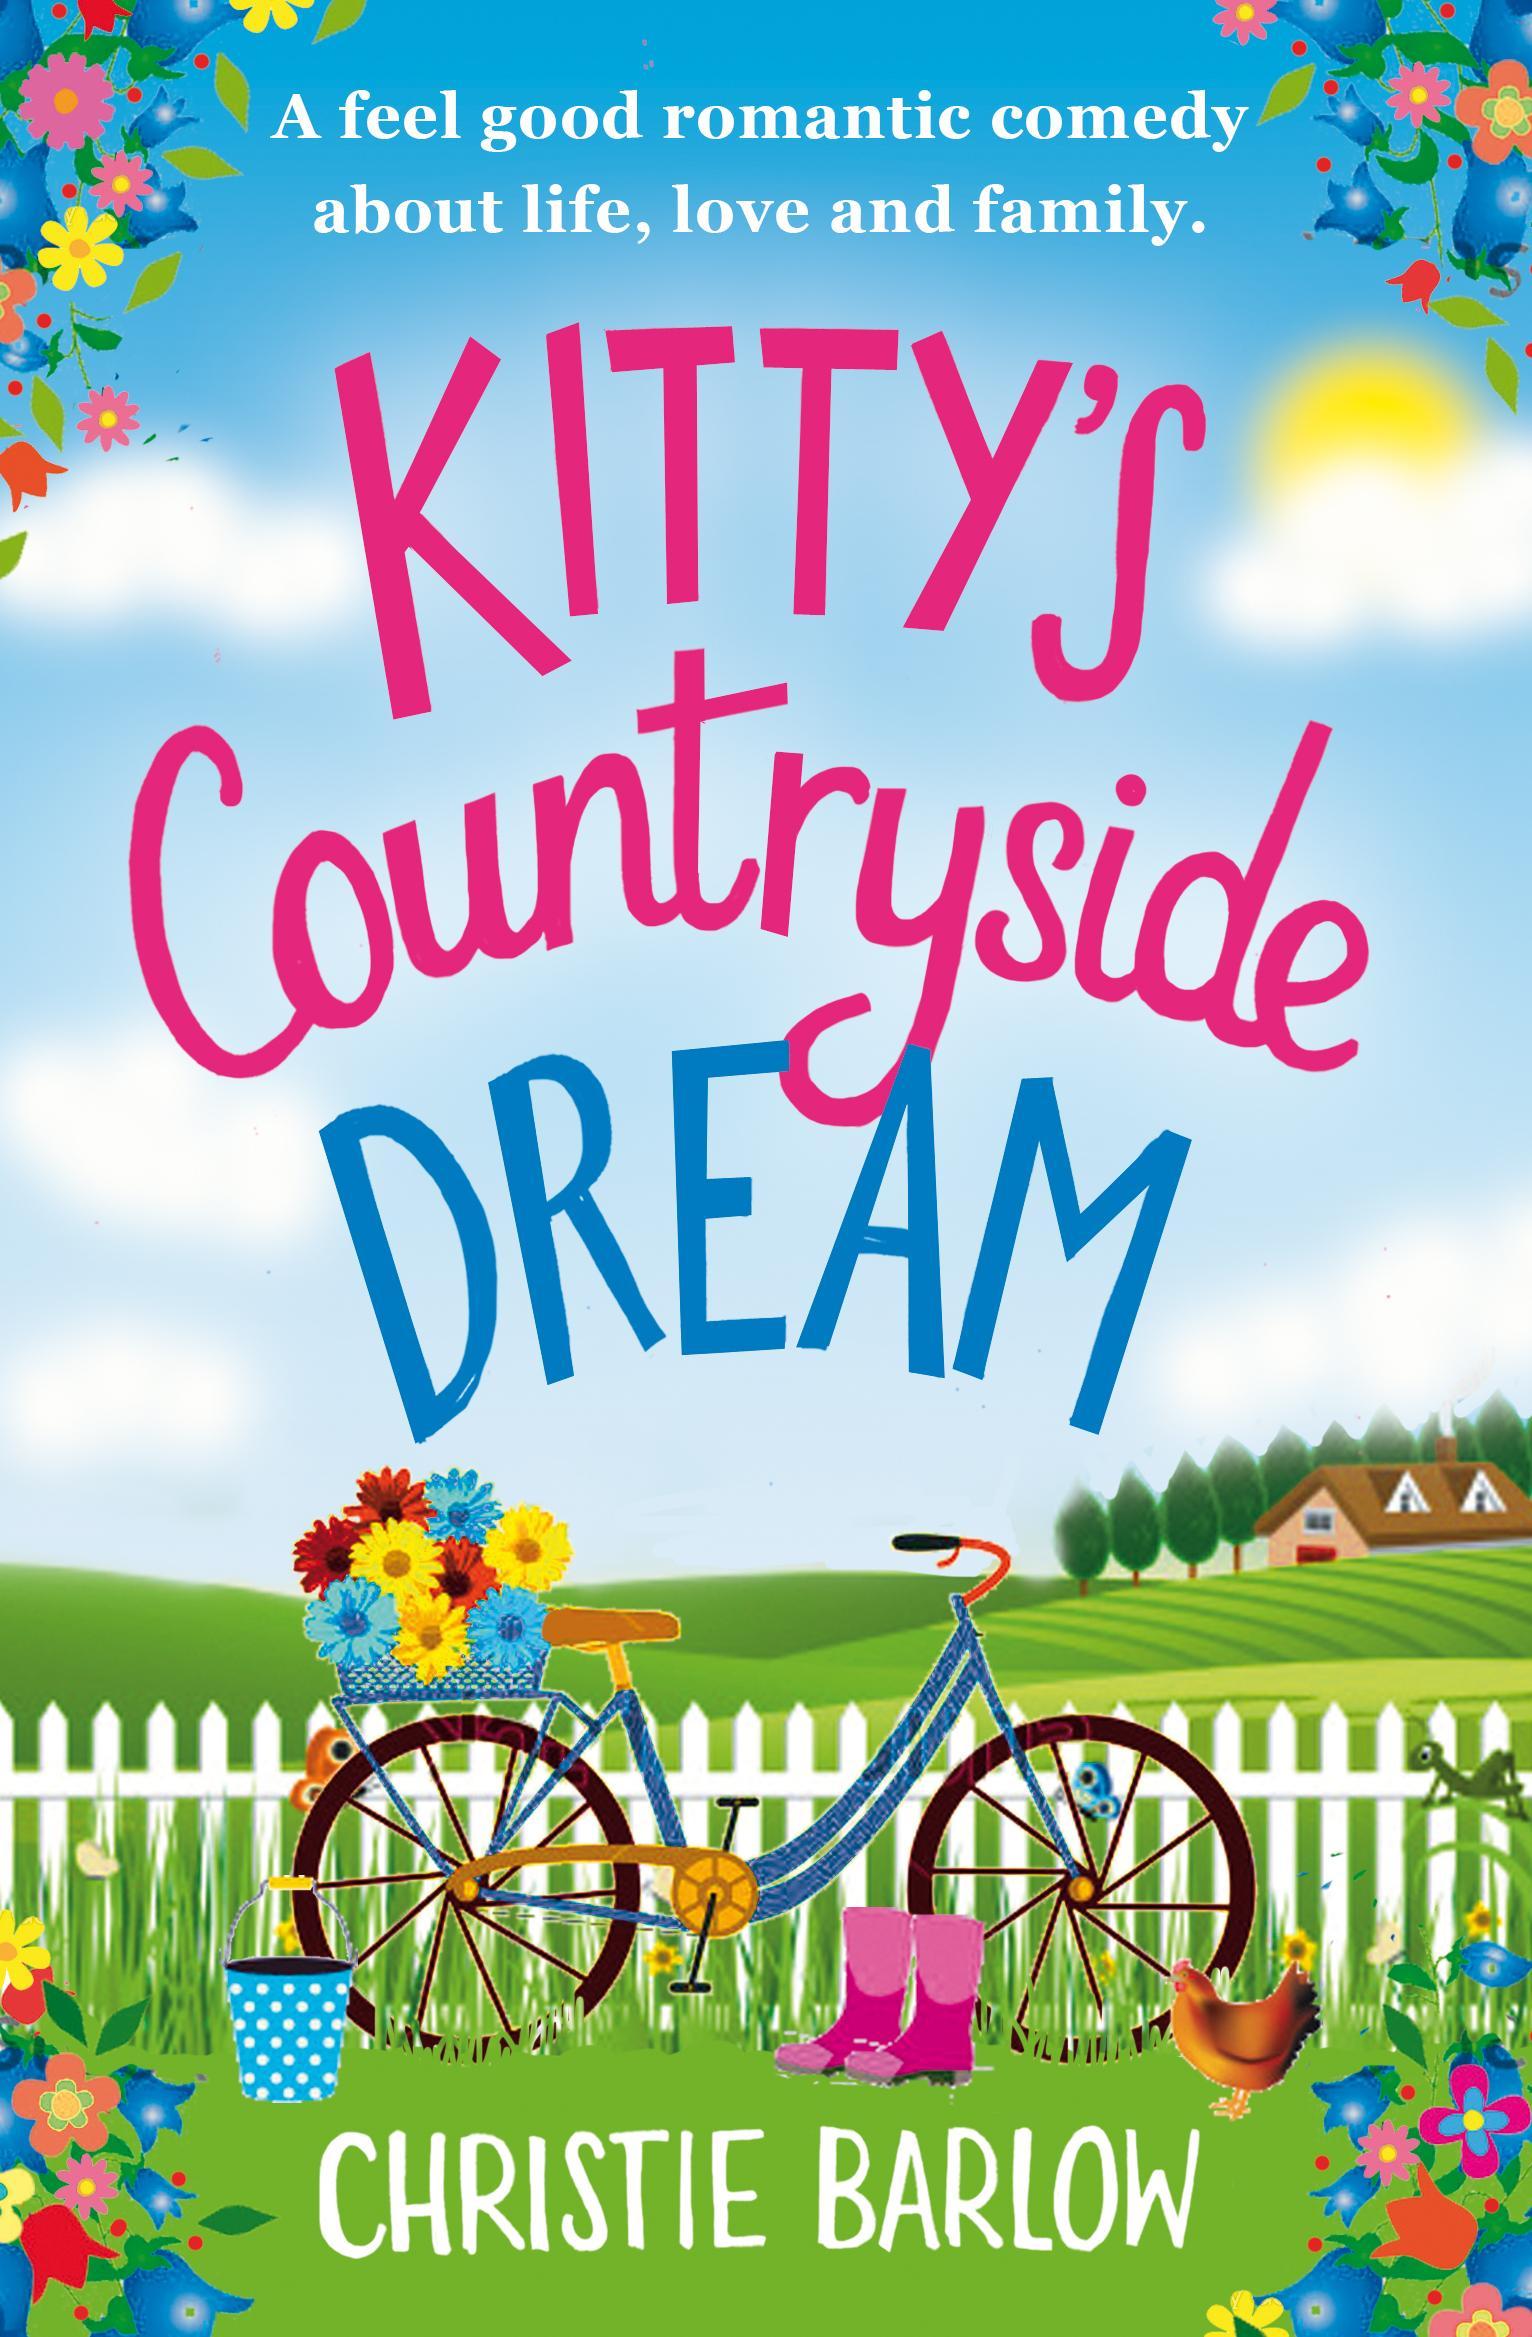 Barlow　eBook　Dream　Kitty's　Christie　Weltbild　Countryside　v.